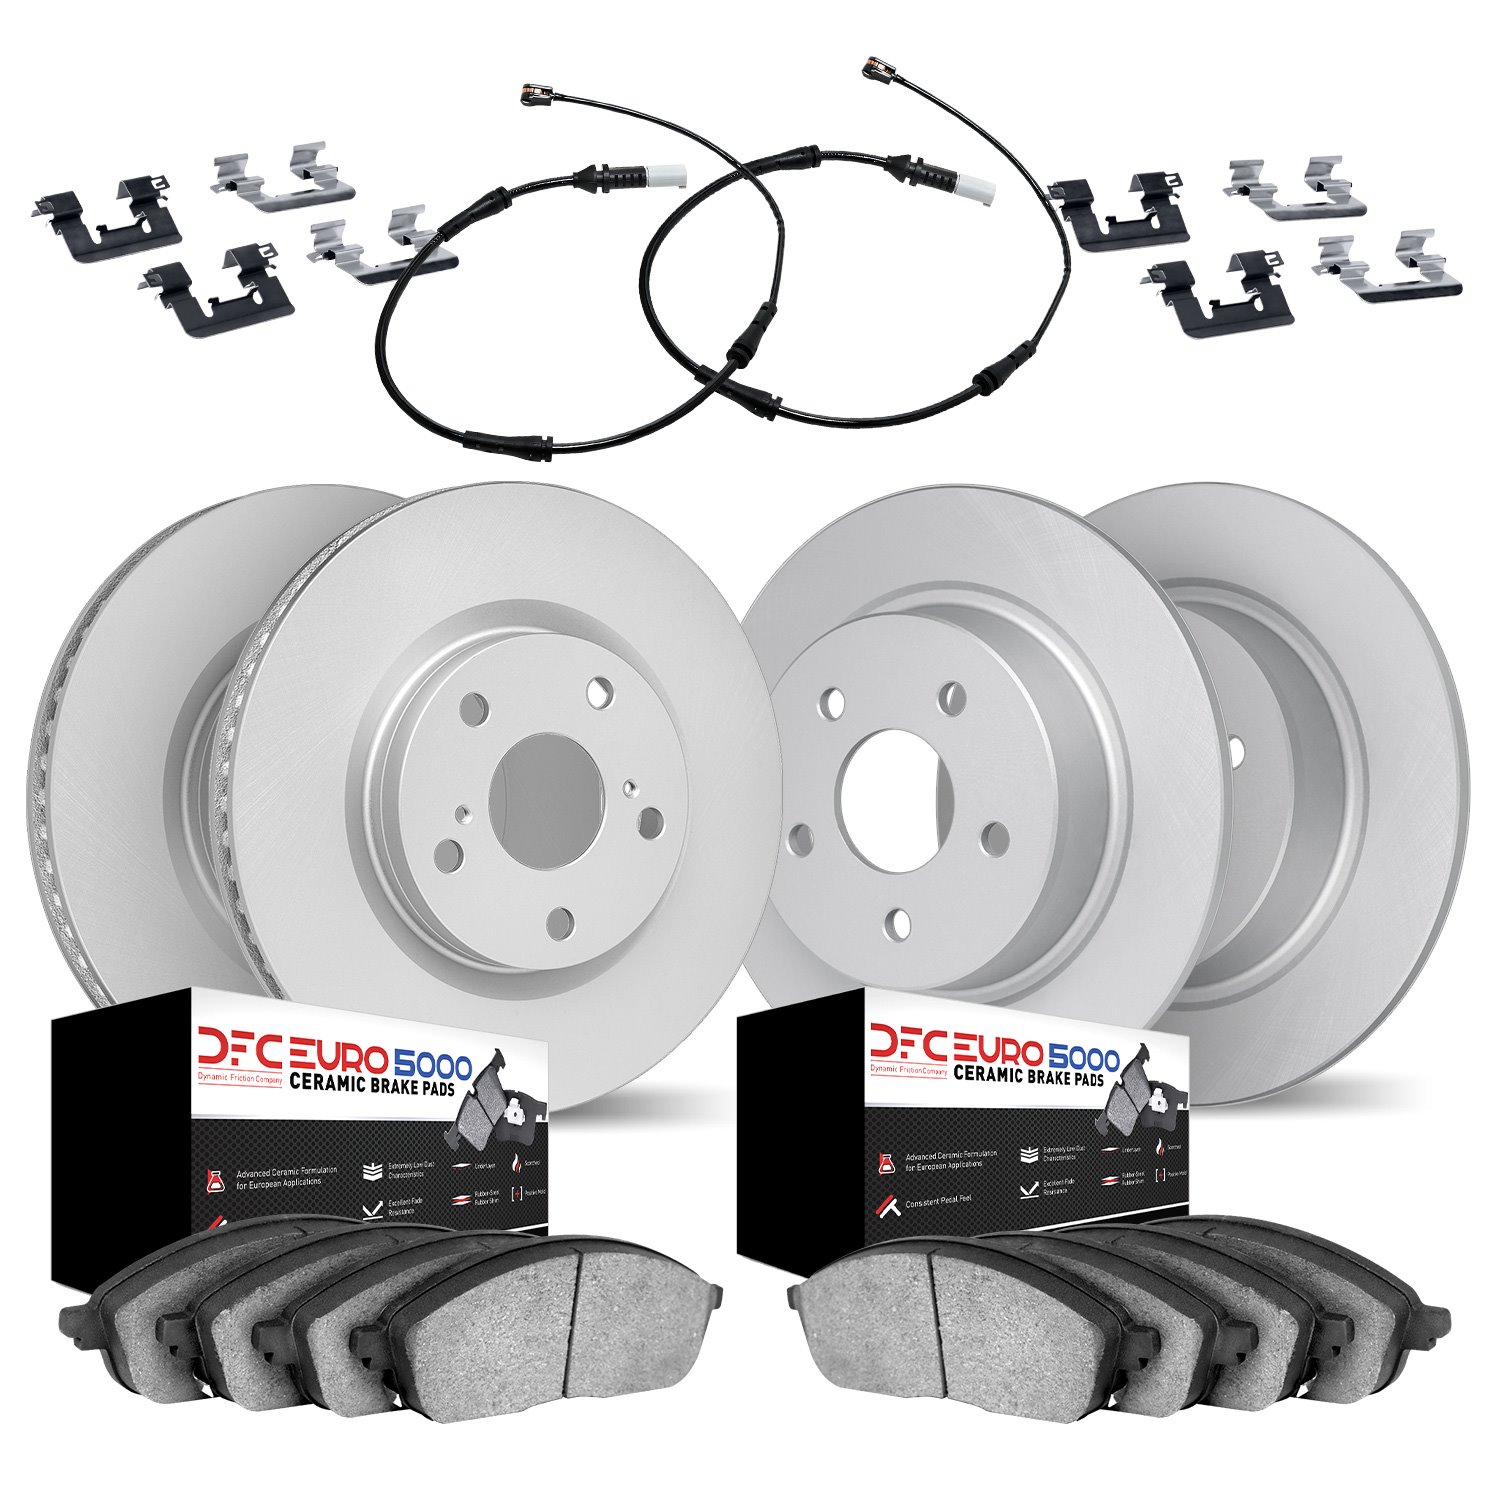 4624-12758 Geospec Brake Rotors w/5000 Euro Ceramic Brake Pads/Sensor & Hardware Kit, Fits Select Multiple Makes/Models, Positio